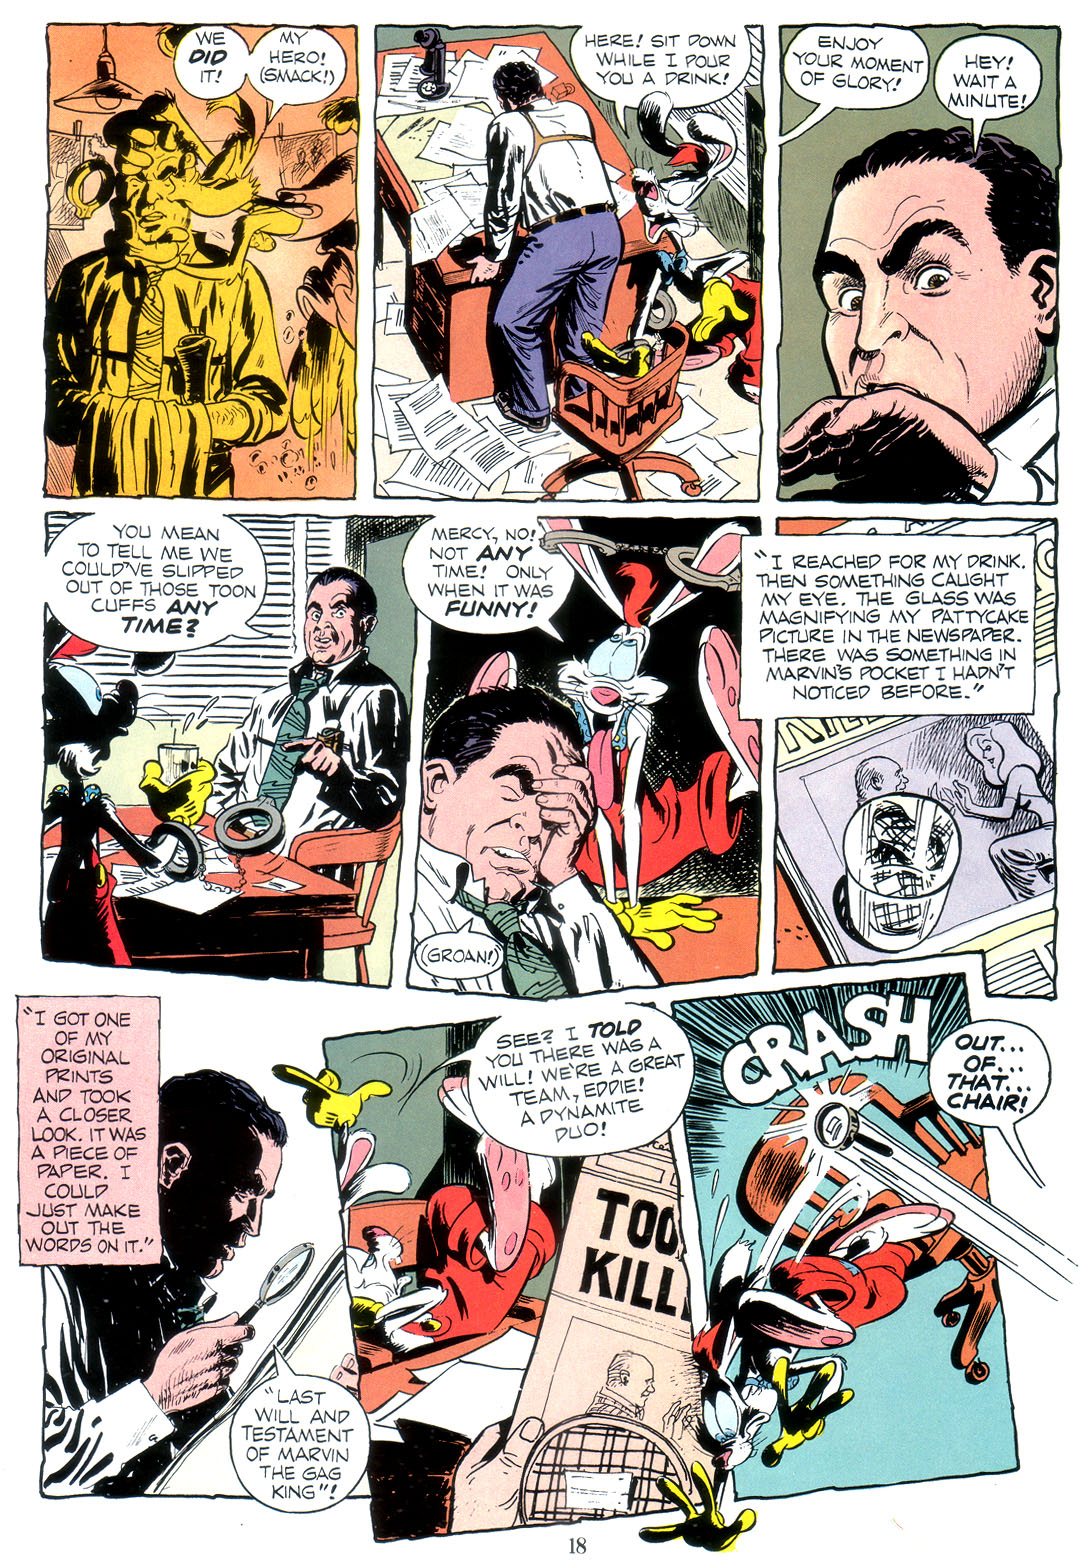 Marvel Graphic Novel issue 41 - Who Framed Roger Rabbit - Page 20